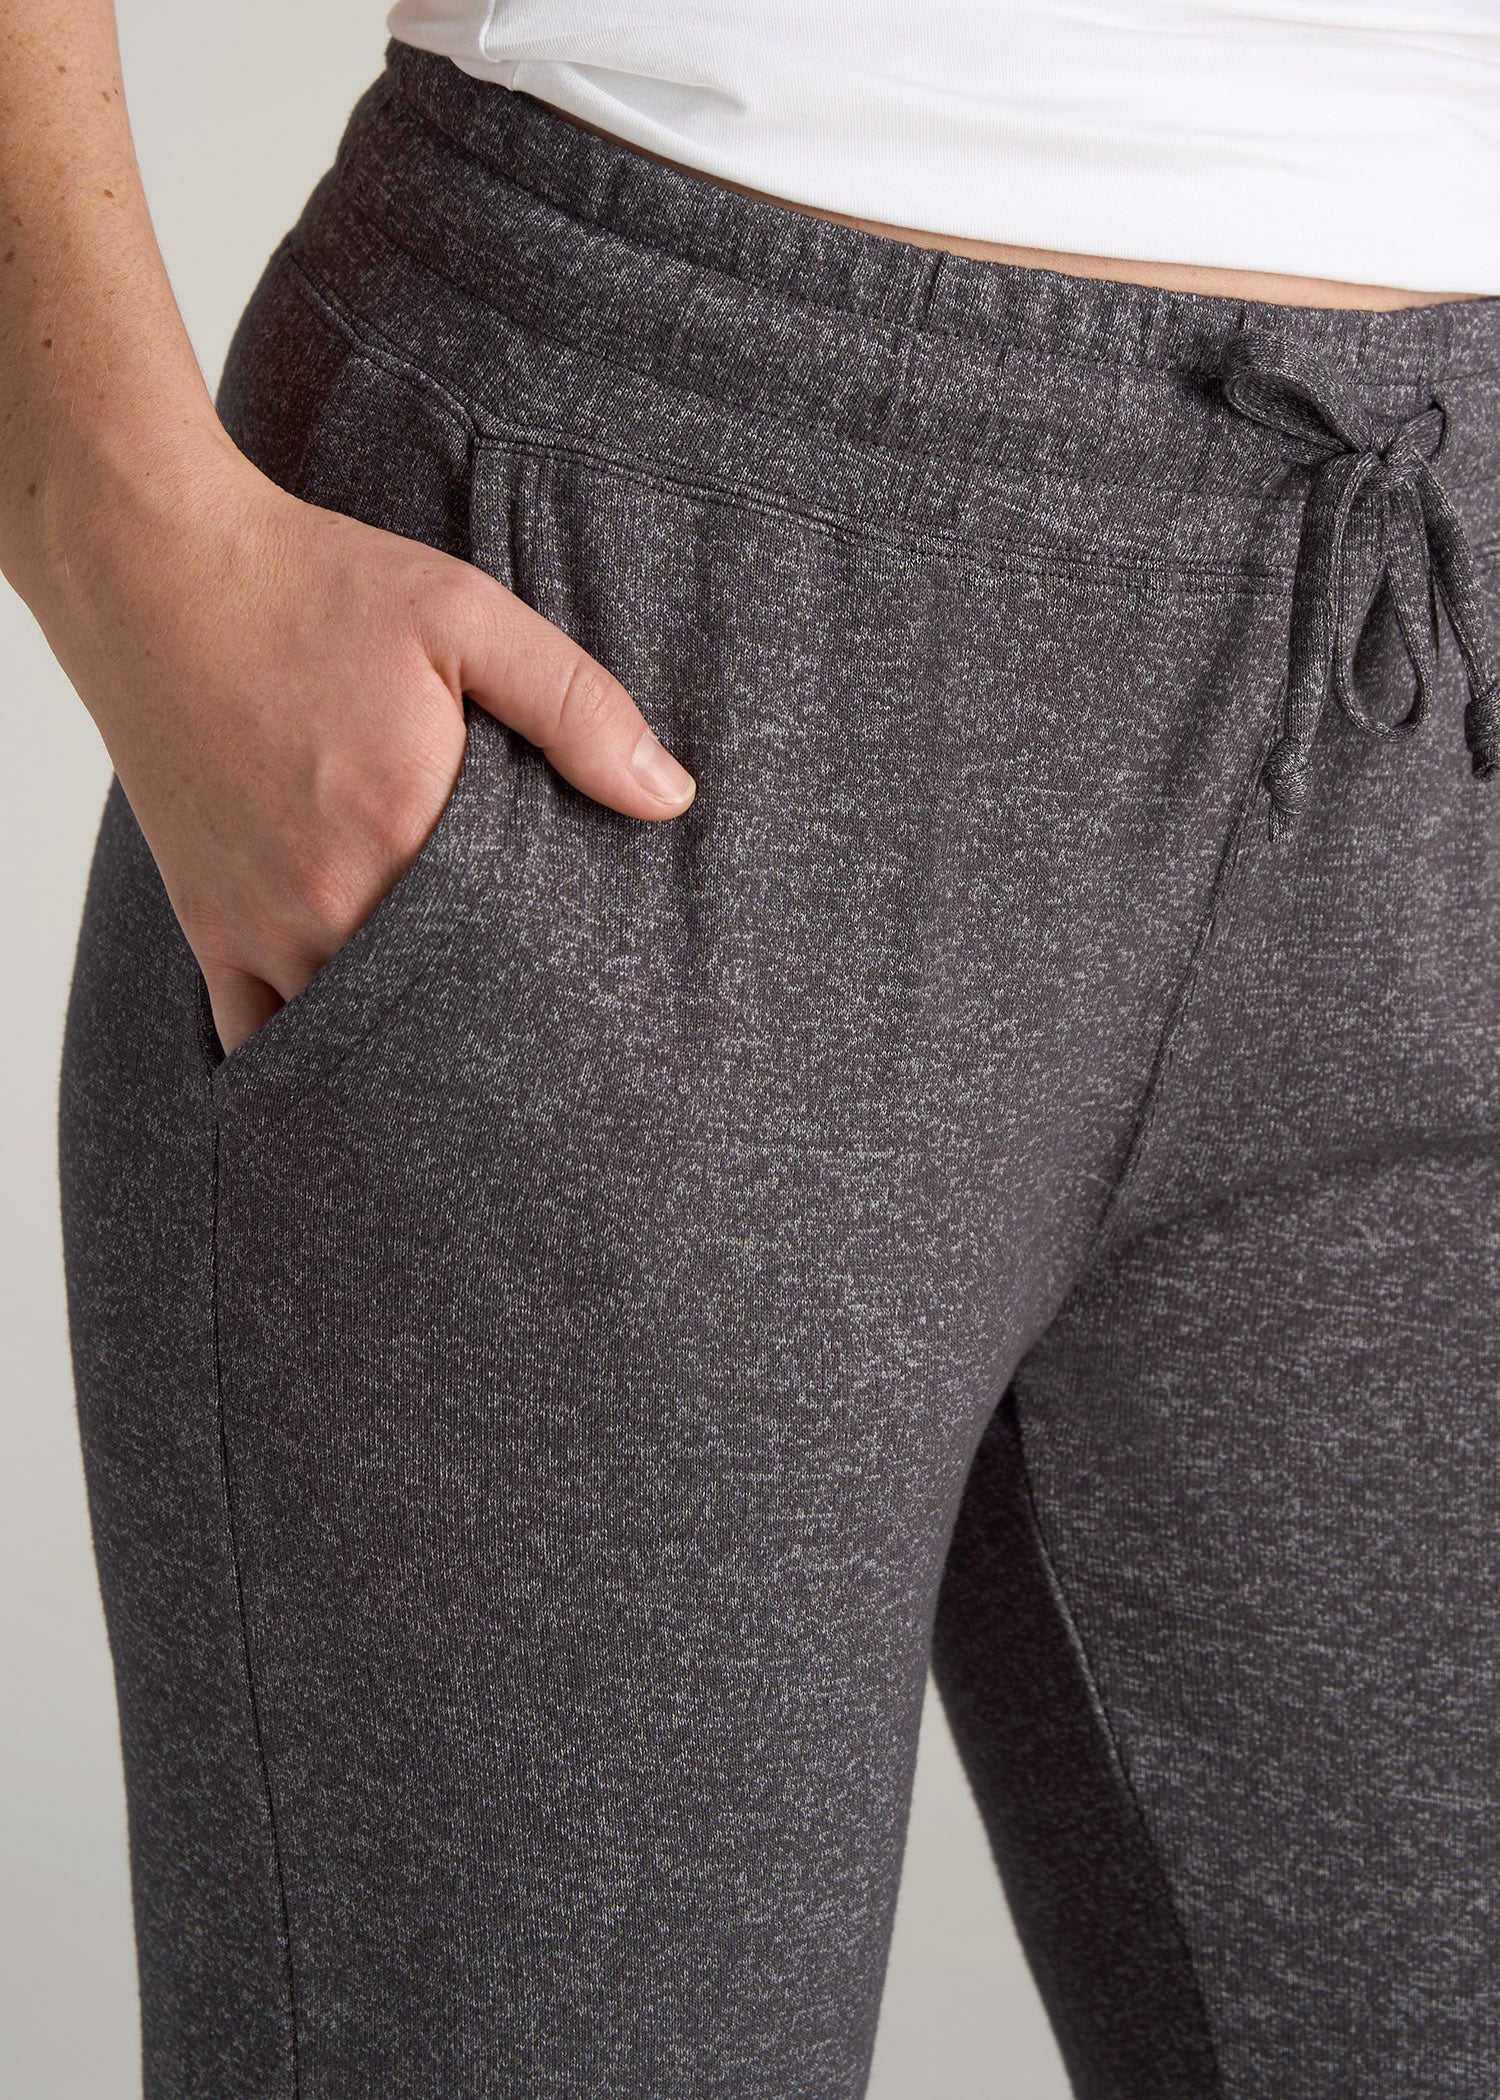 HDE Pajama Pants for Women PJ Pants Comfy Loungewear Charcoal 1X Plus